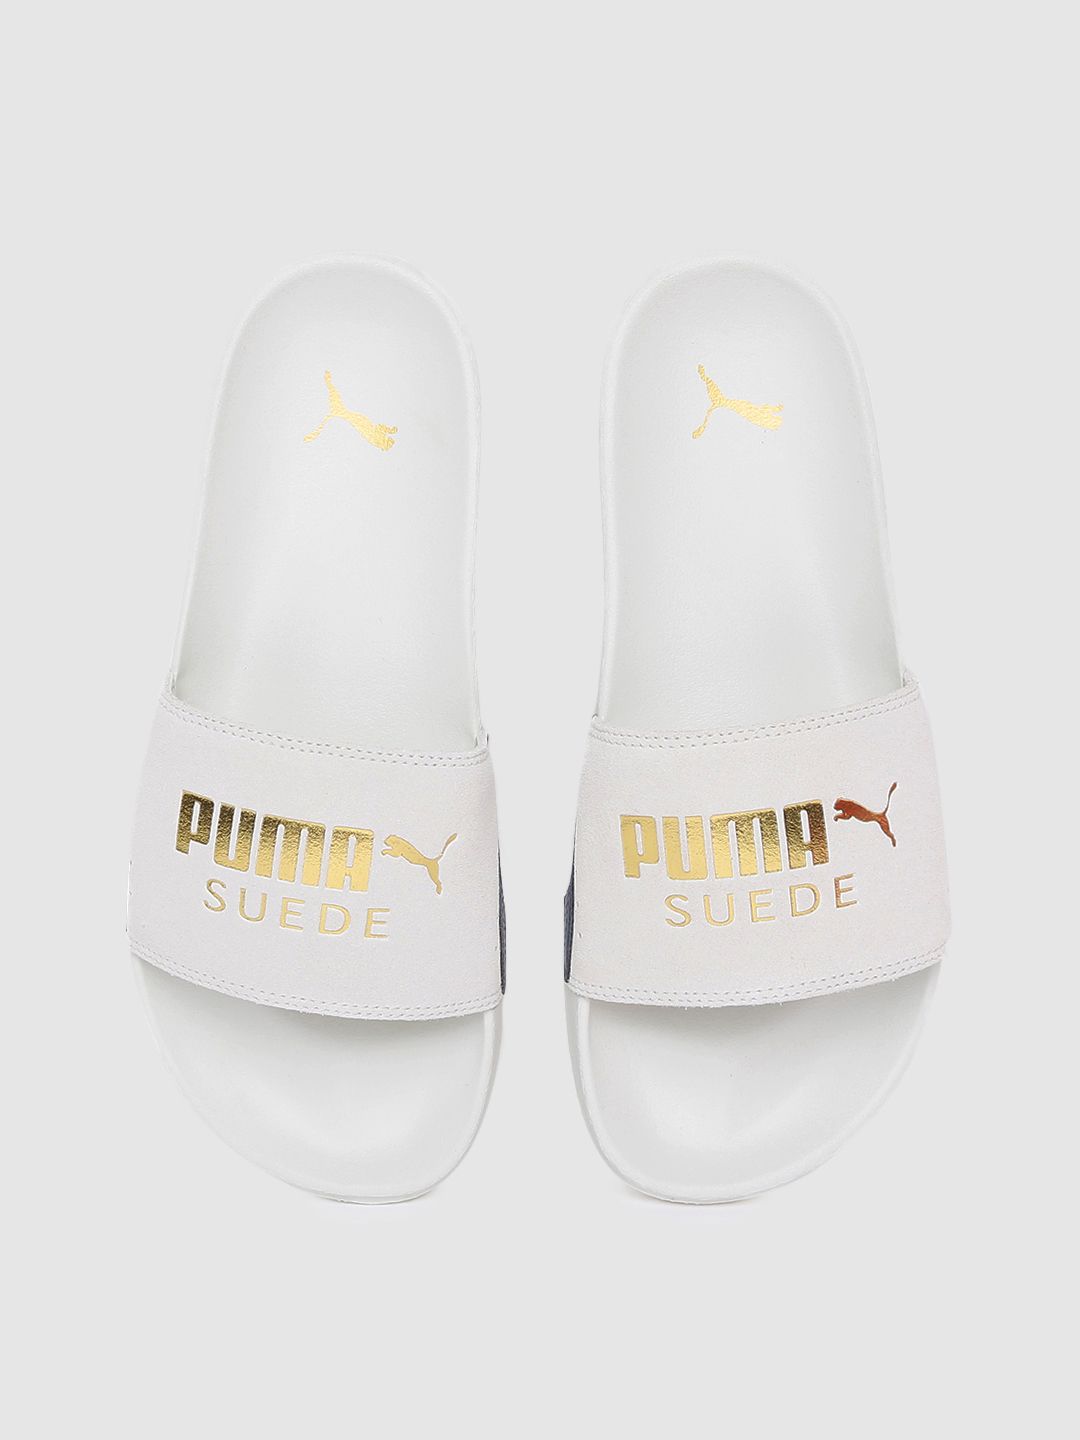 Puma Unisex White & Gold-Toned Leadcat FTR Classic Logo Printed Sliders Price in India